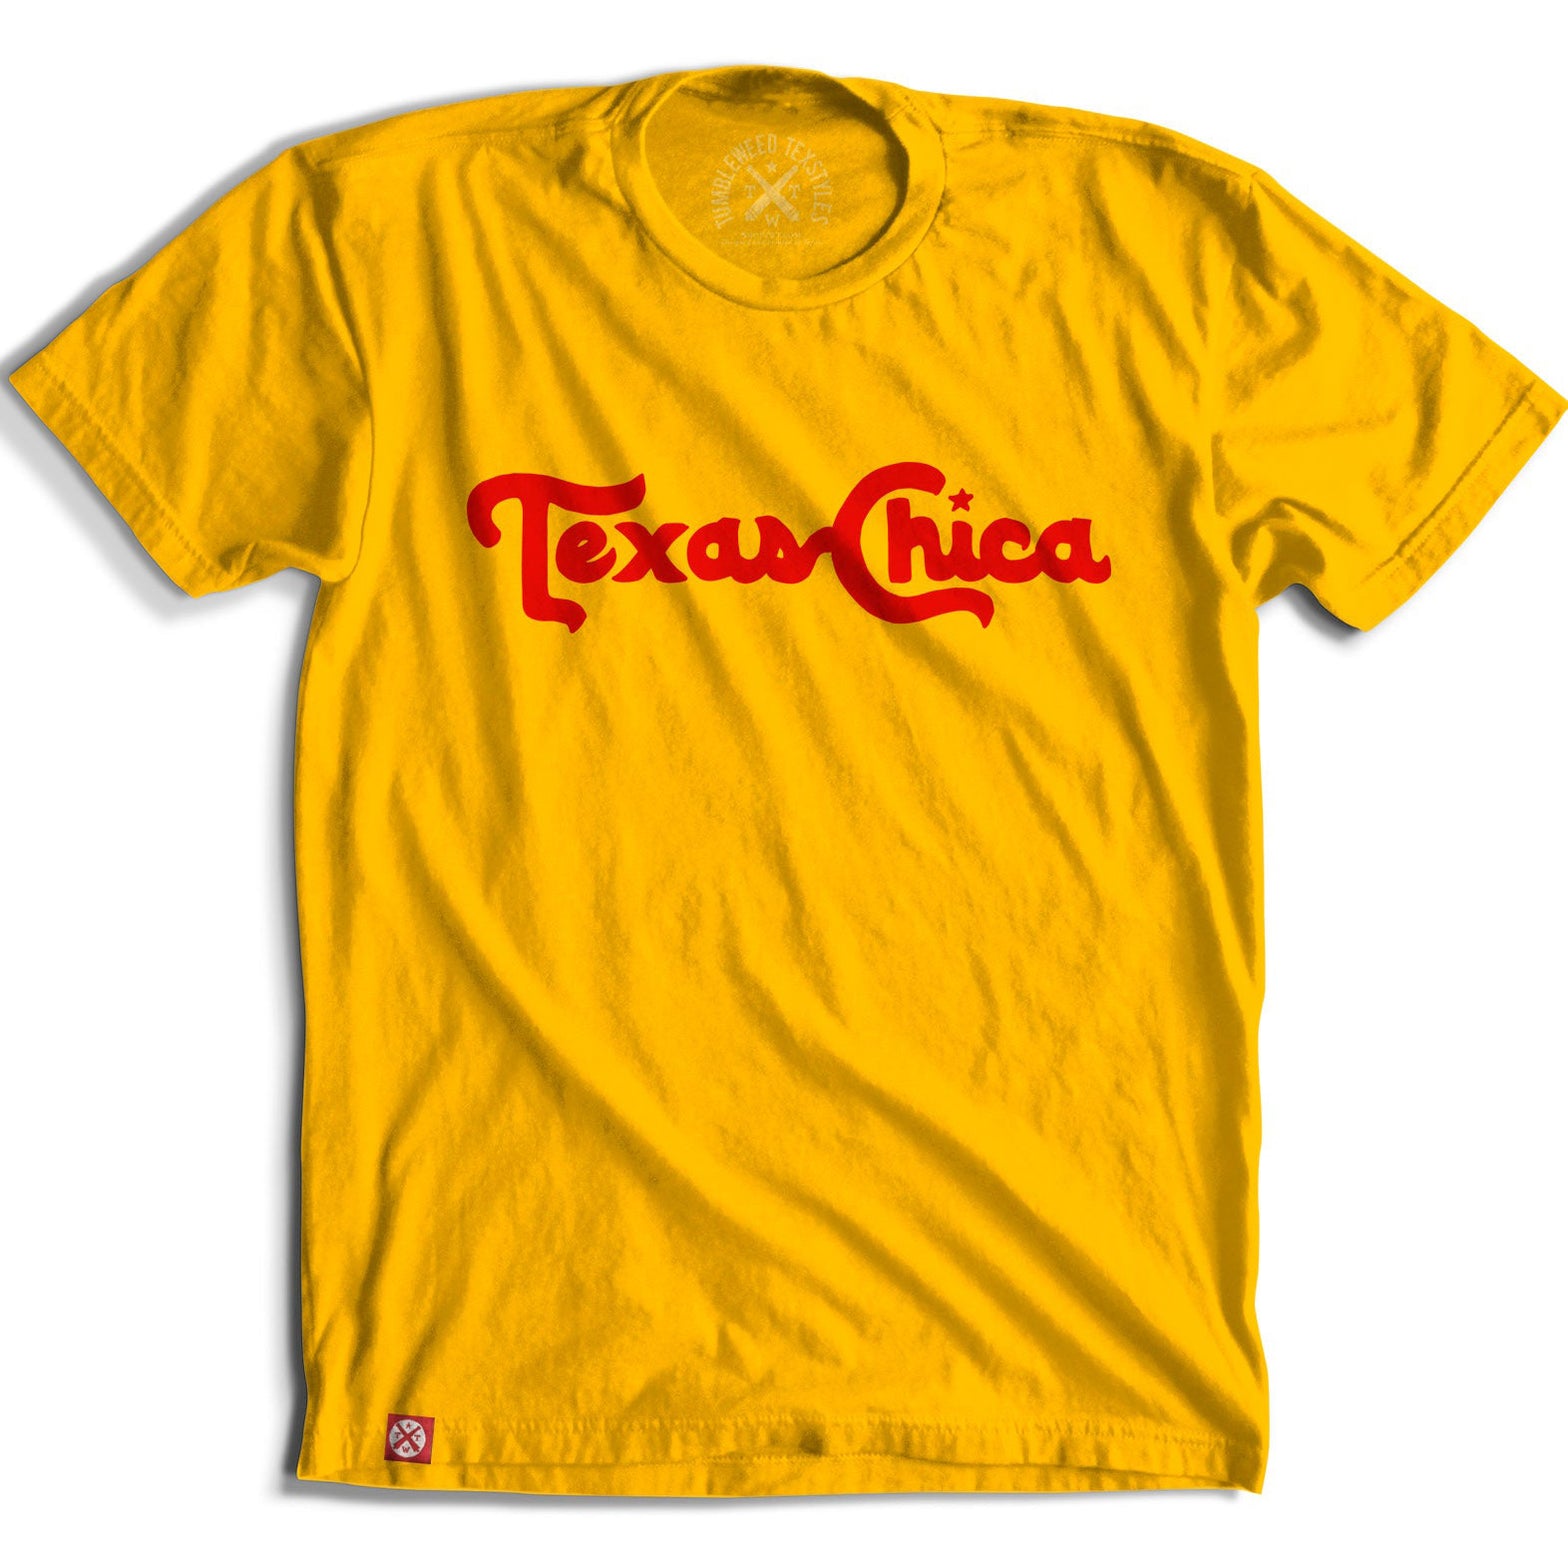 Texas T-Shirts, Hats and Gear - Hand-drawn Texas designs